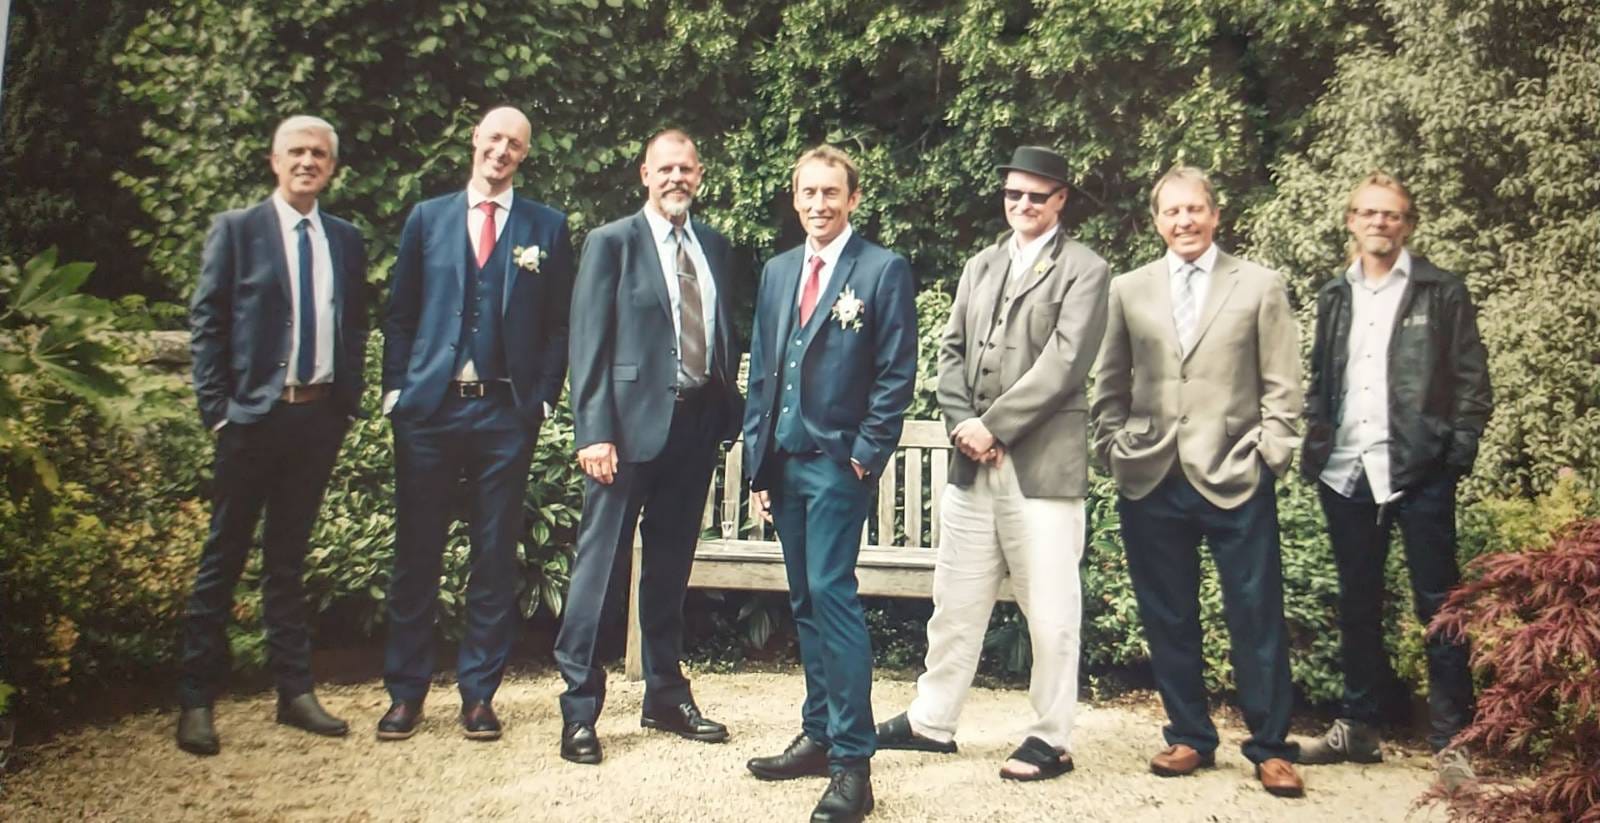 Thursday boys at Steve's wedding 2021